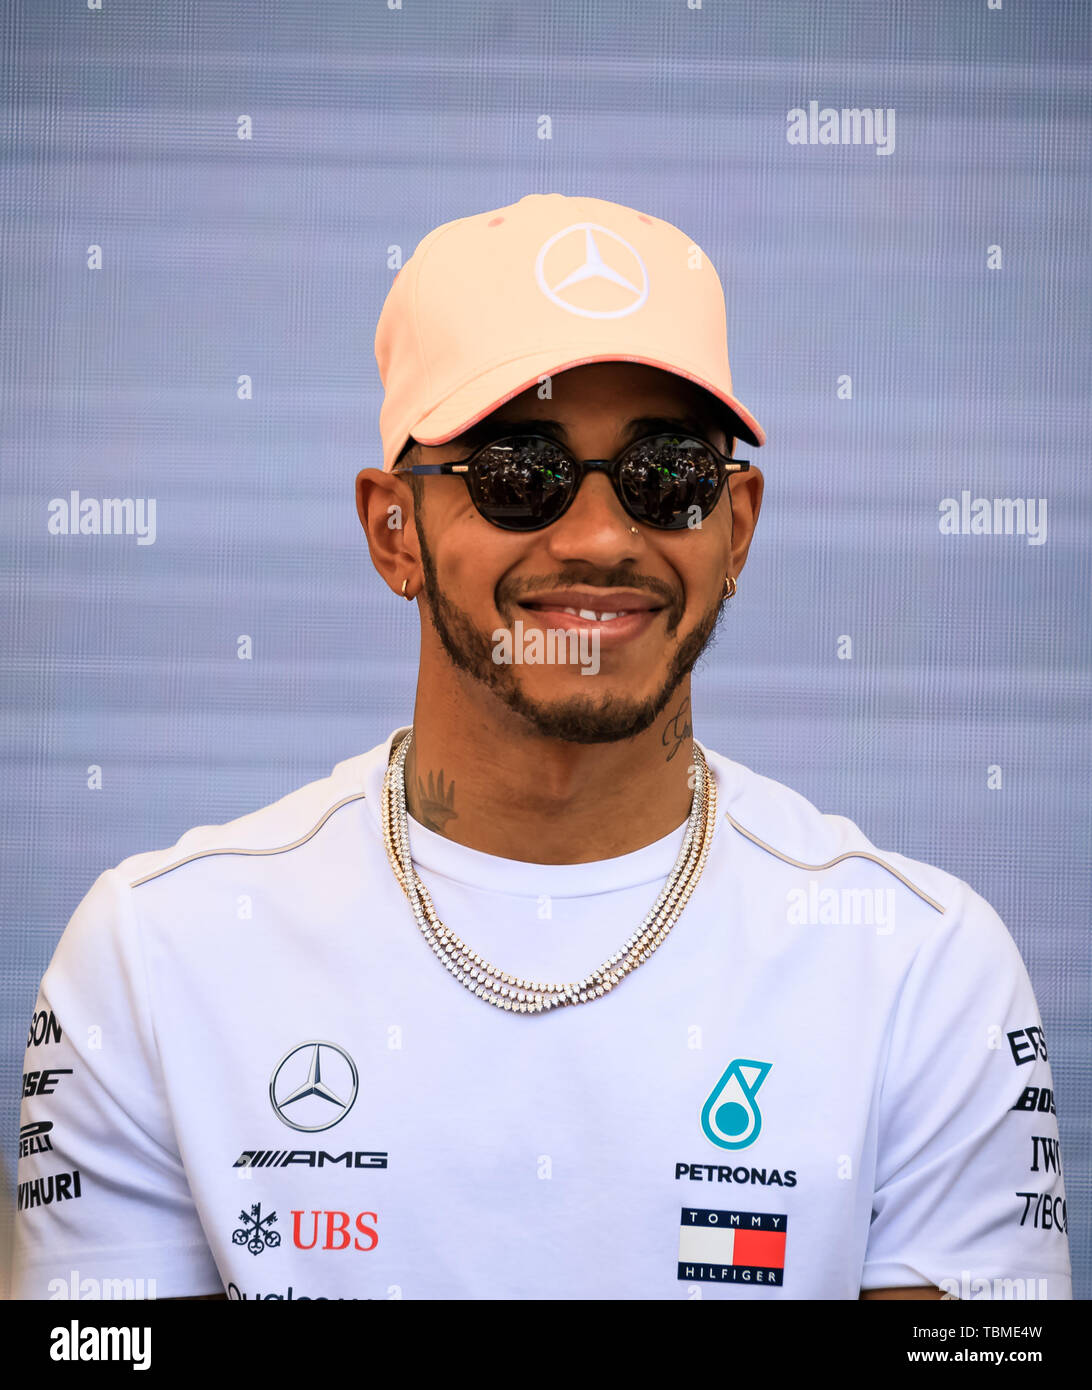 Monte Carlo, Monaco - May 25, 2018: British racing driver Lewis Hamilton, 5 time Formula One World Champion at the Monaco F1 Grand Prix race fan event Stock Photo